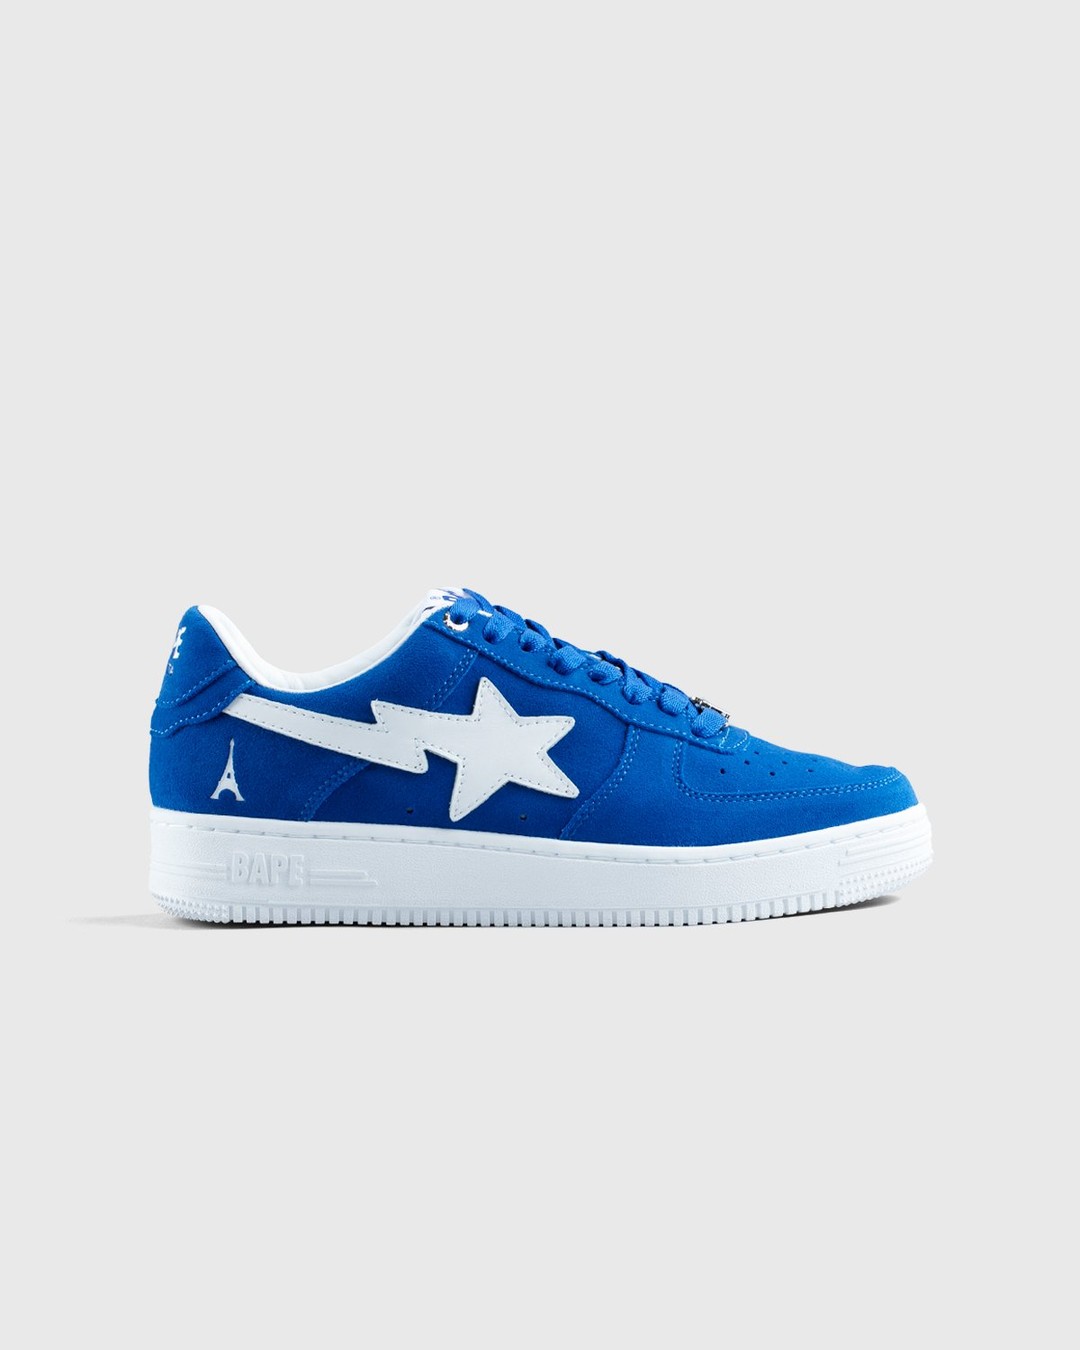 BAPE x Highsnobiety – BAPE STA Blue - Sneakers - Blue - Image 1